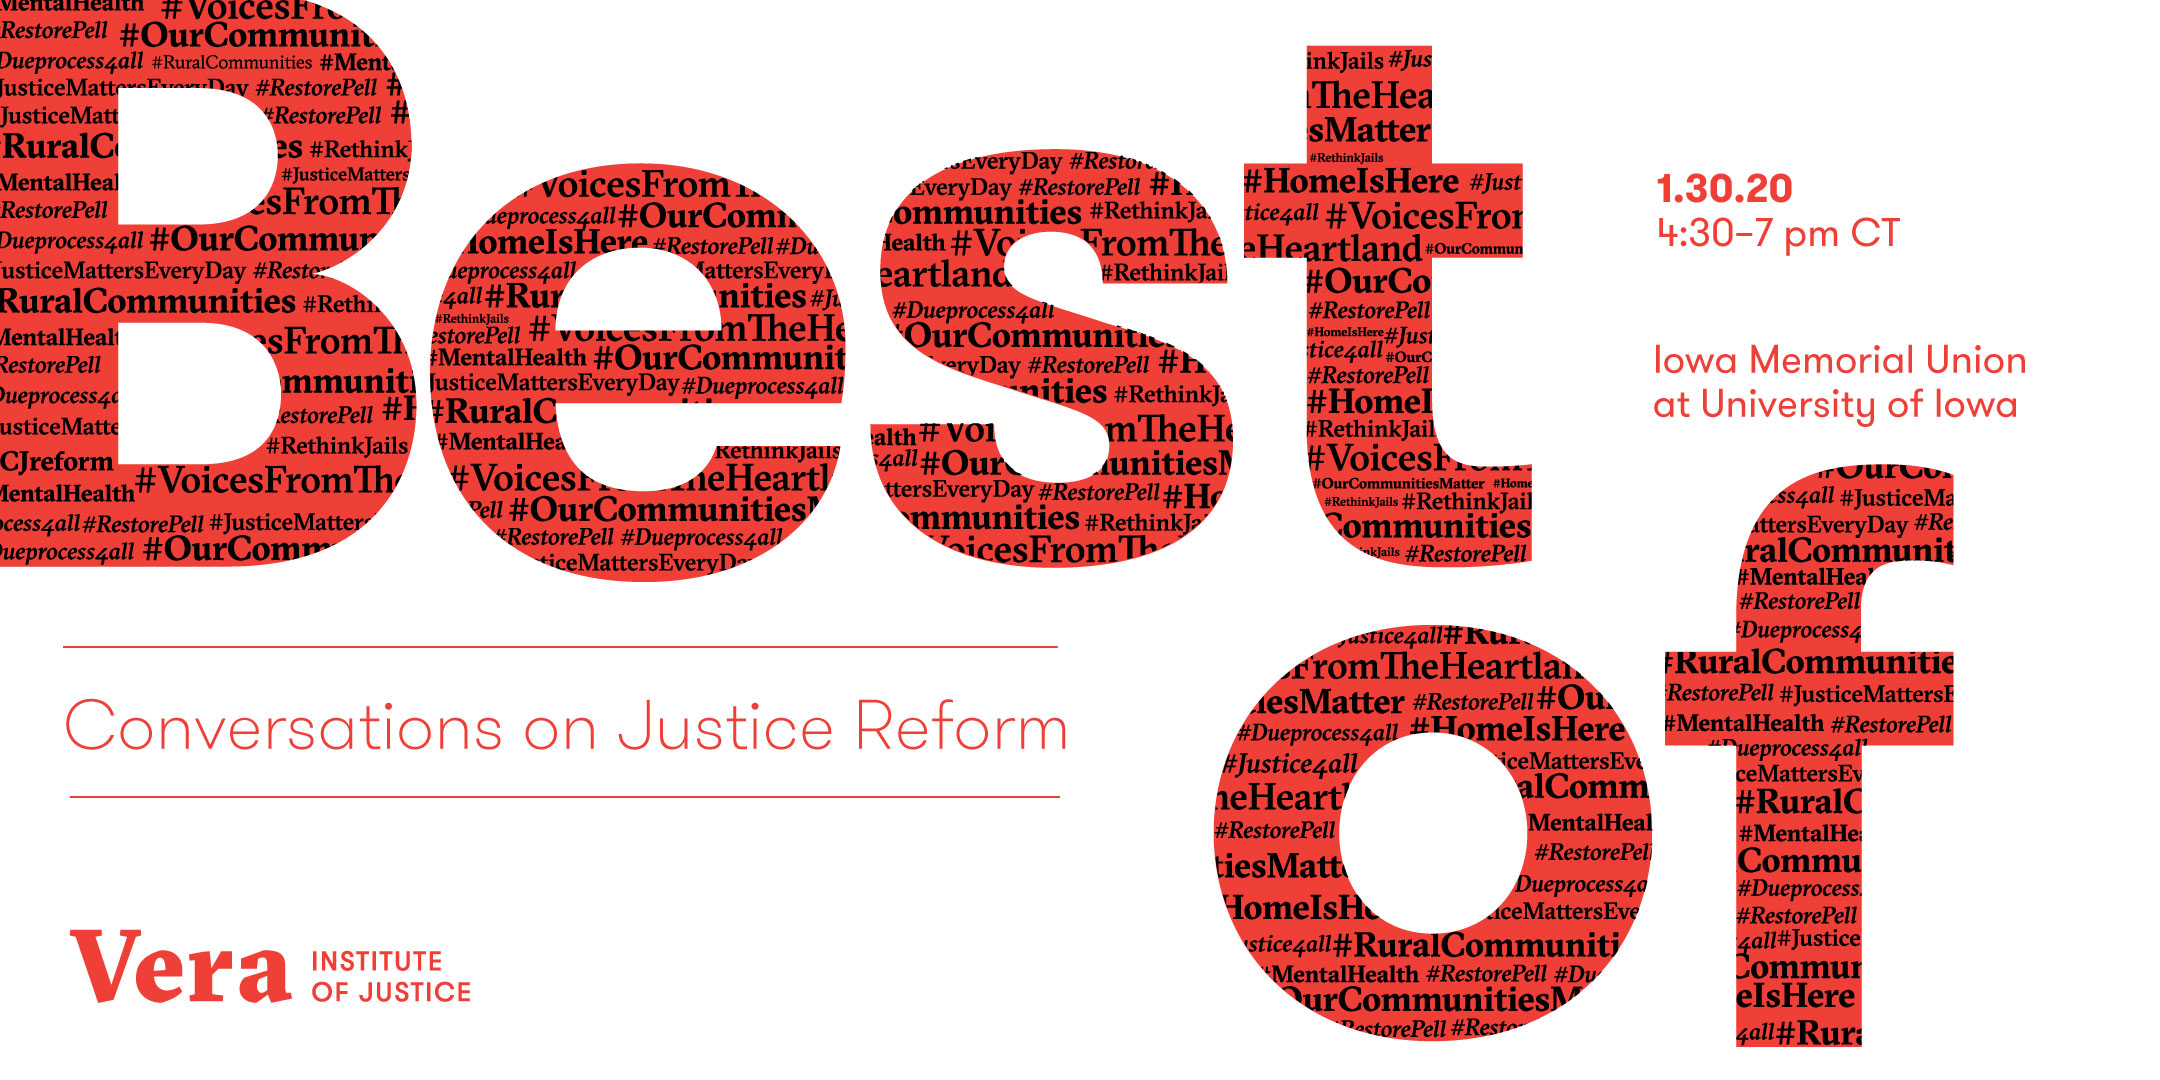 Vera Institute’s Best Of: Conversations on Justice Reform